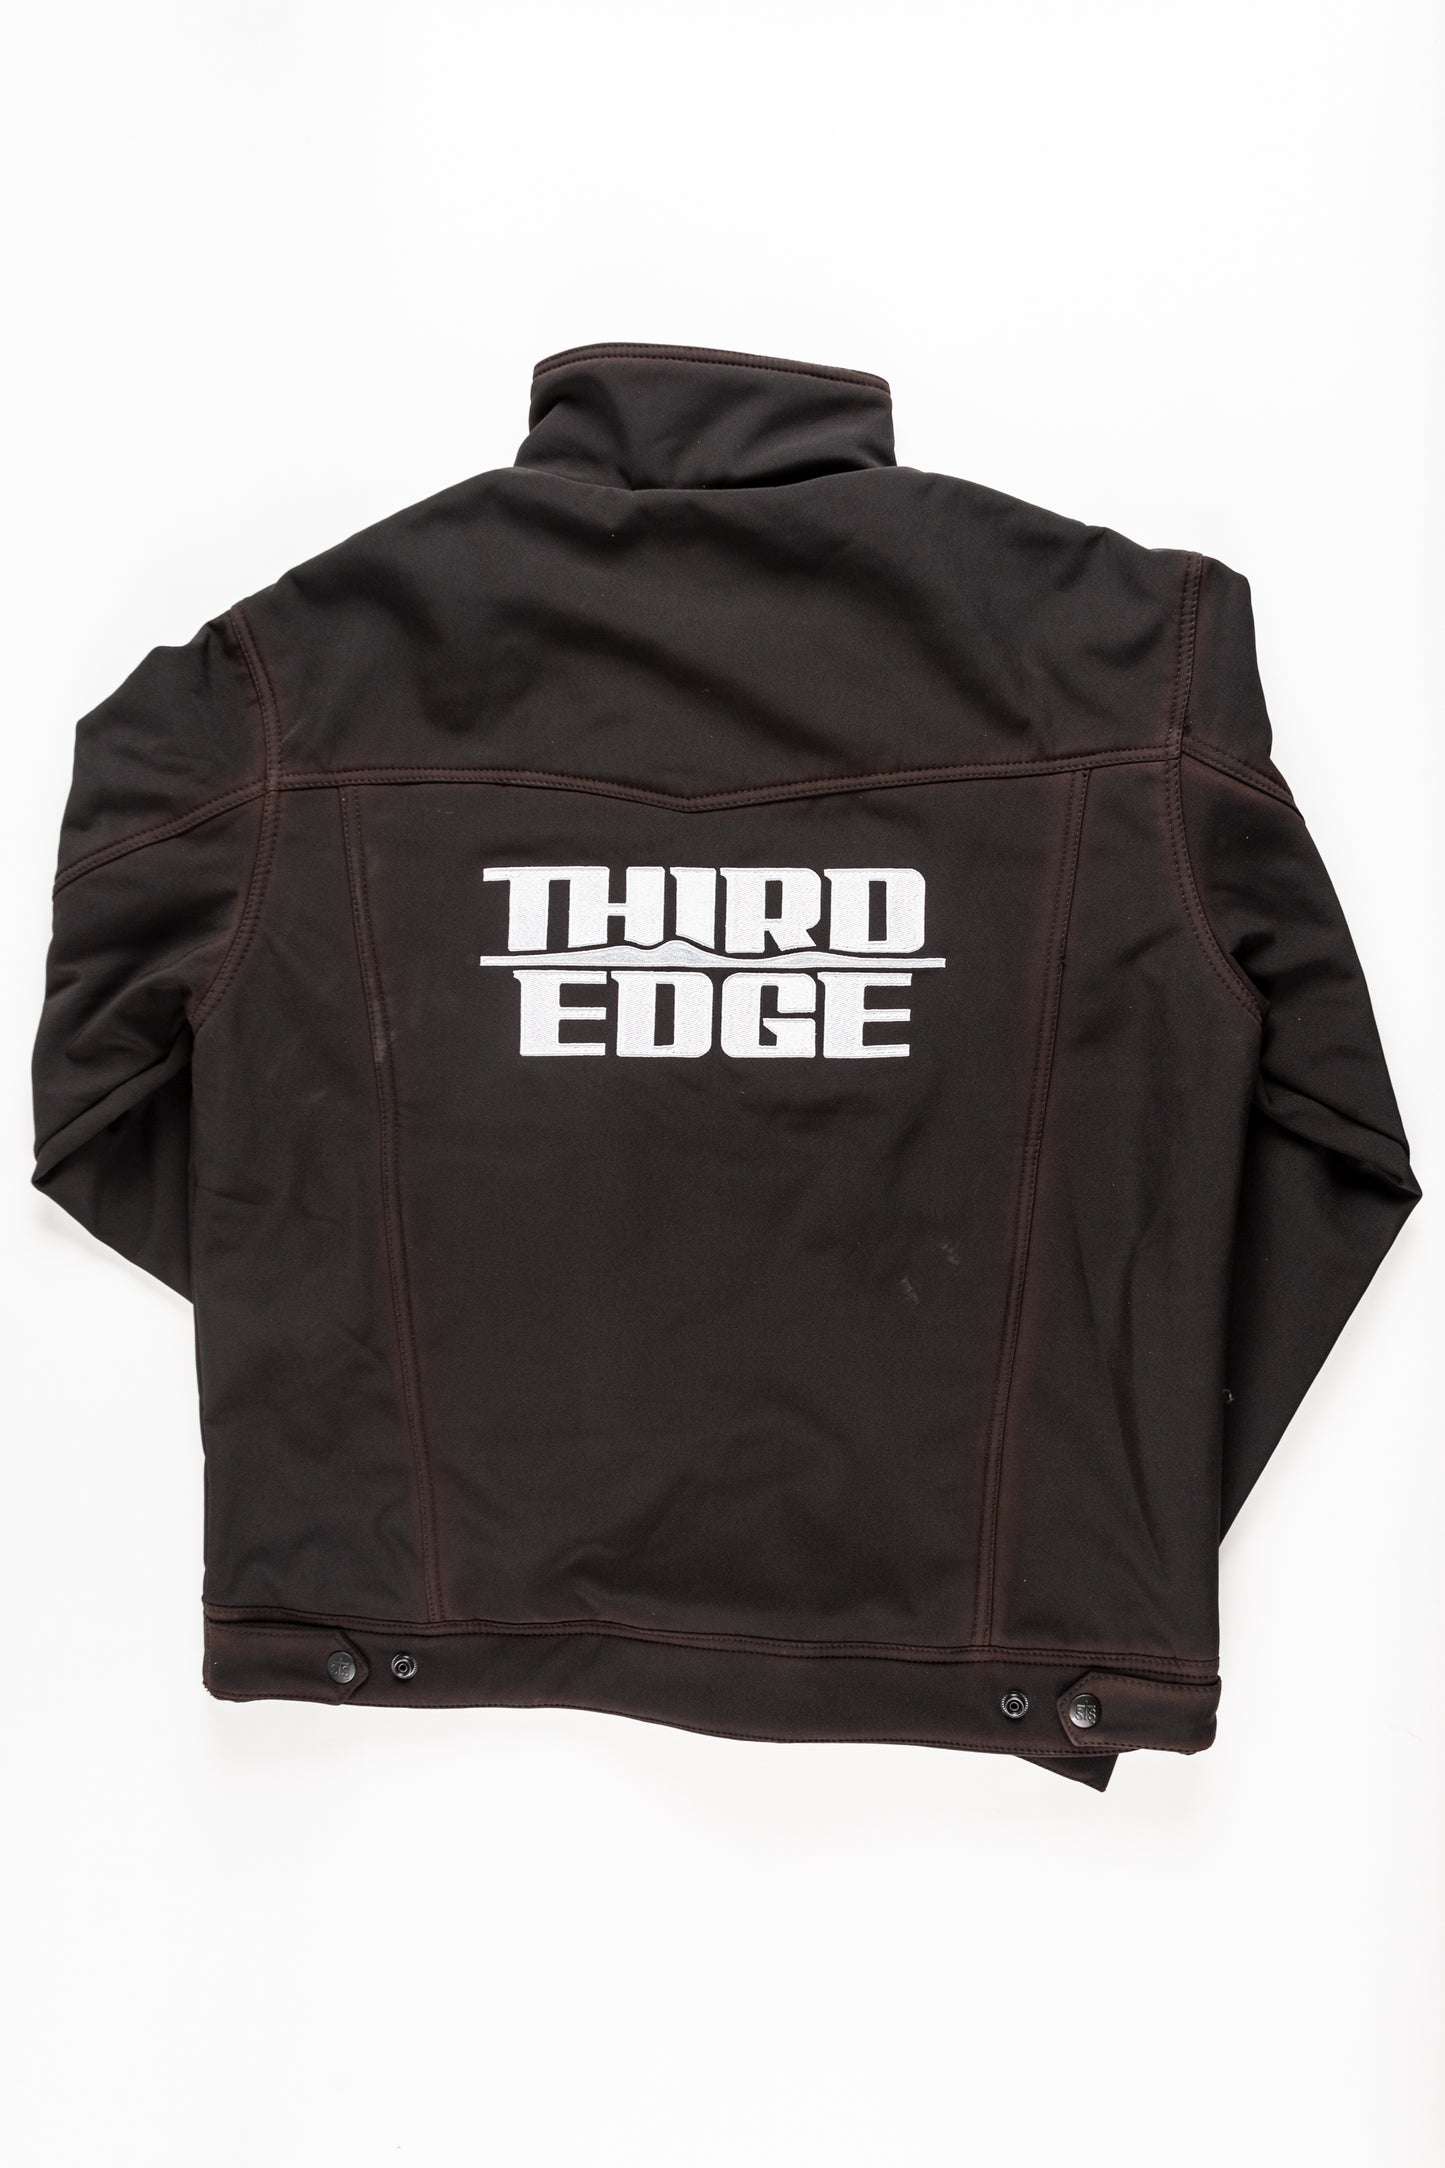 Mens Third Edge Jacket